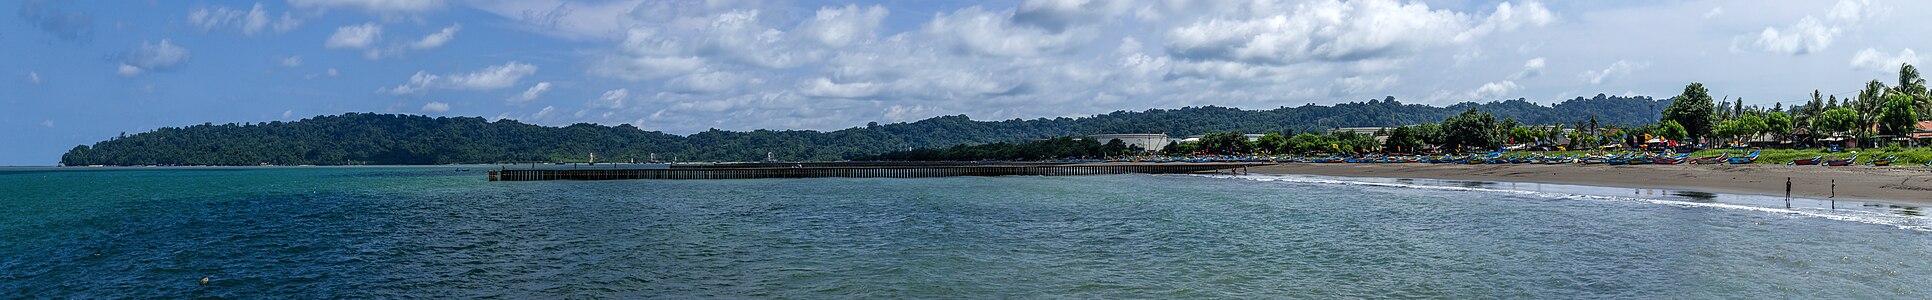 Teluk Penyu Beach (looking east)